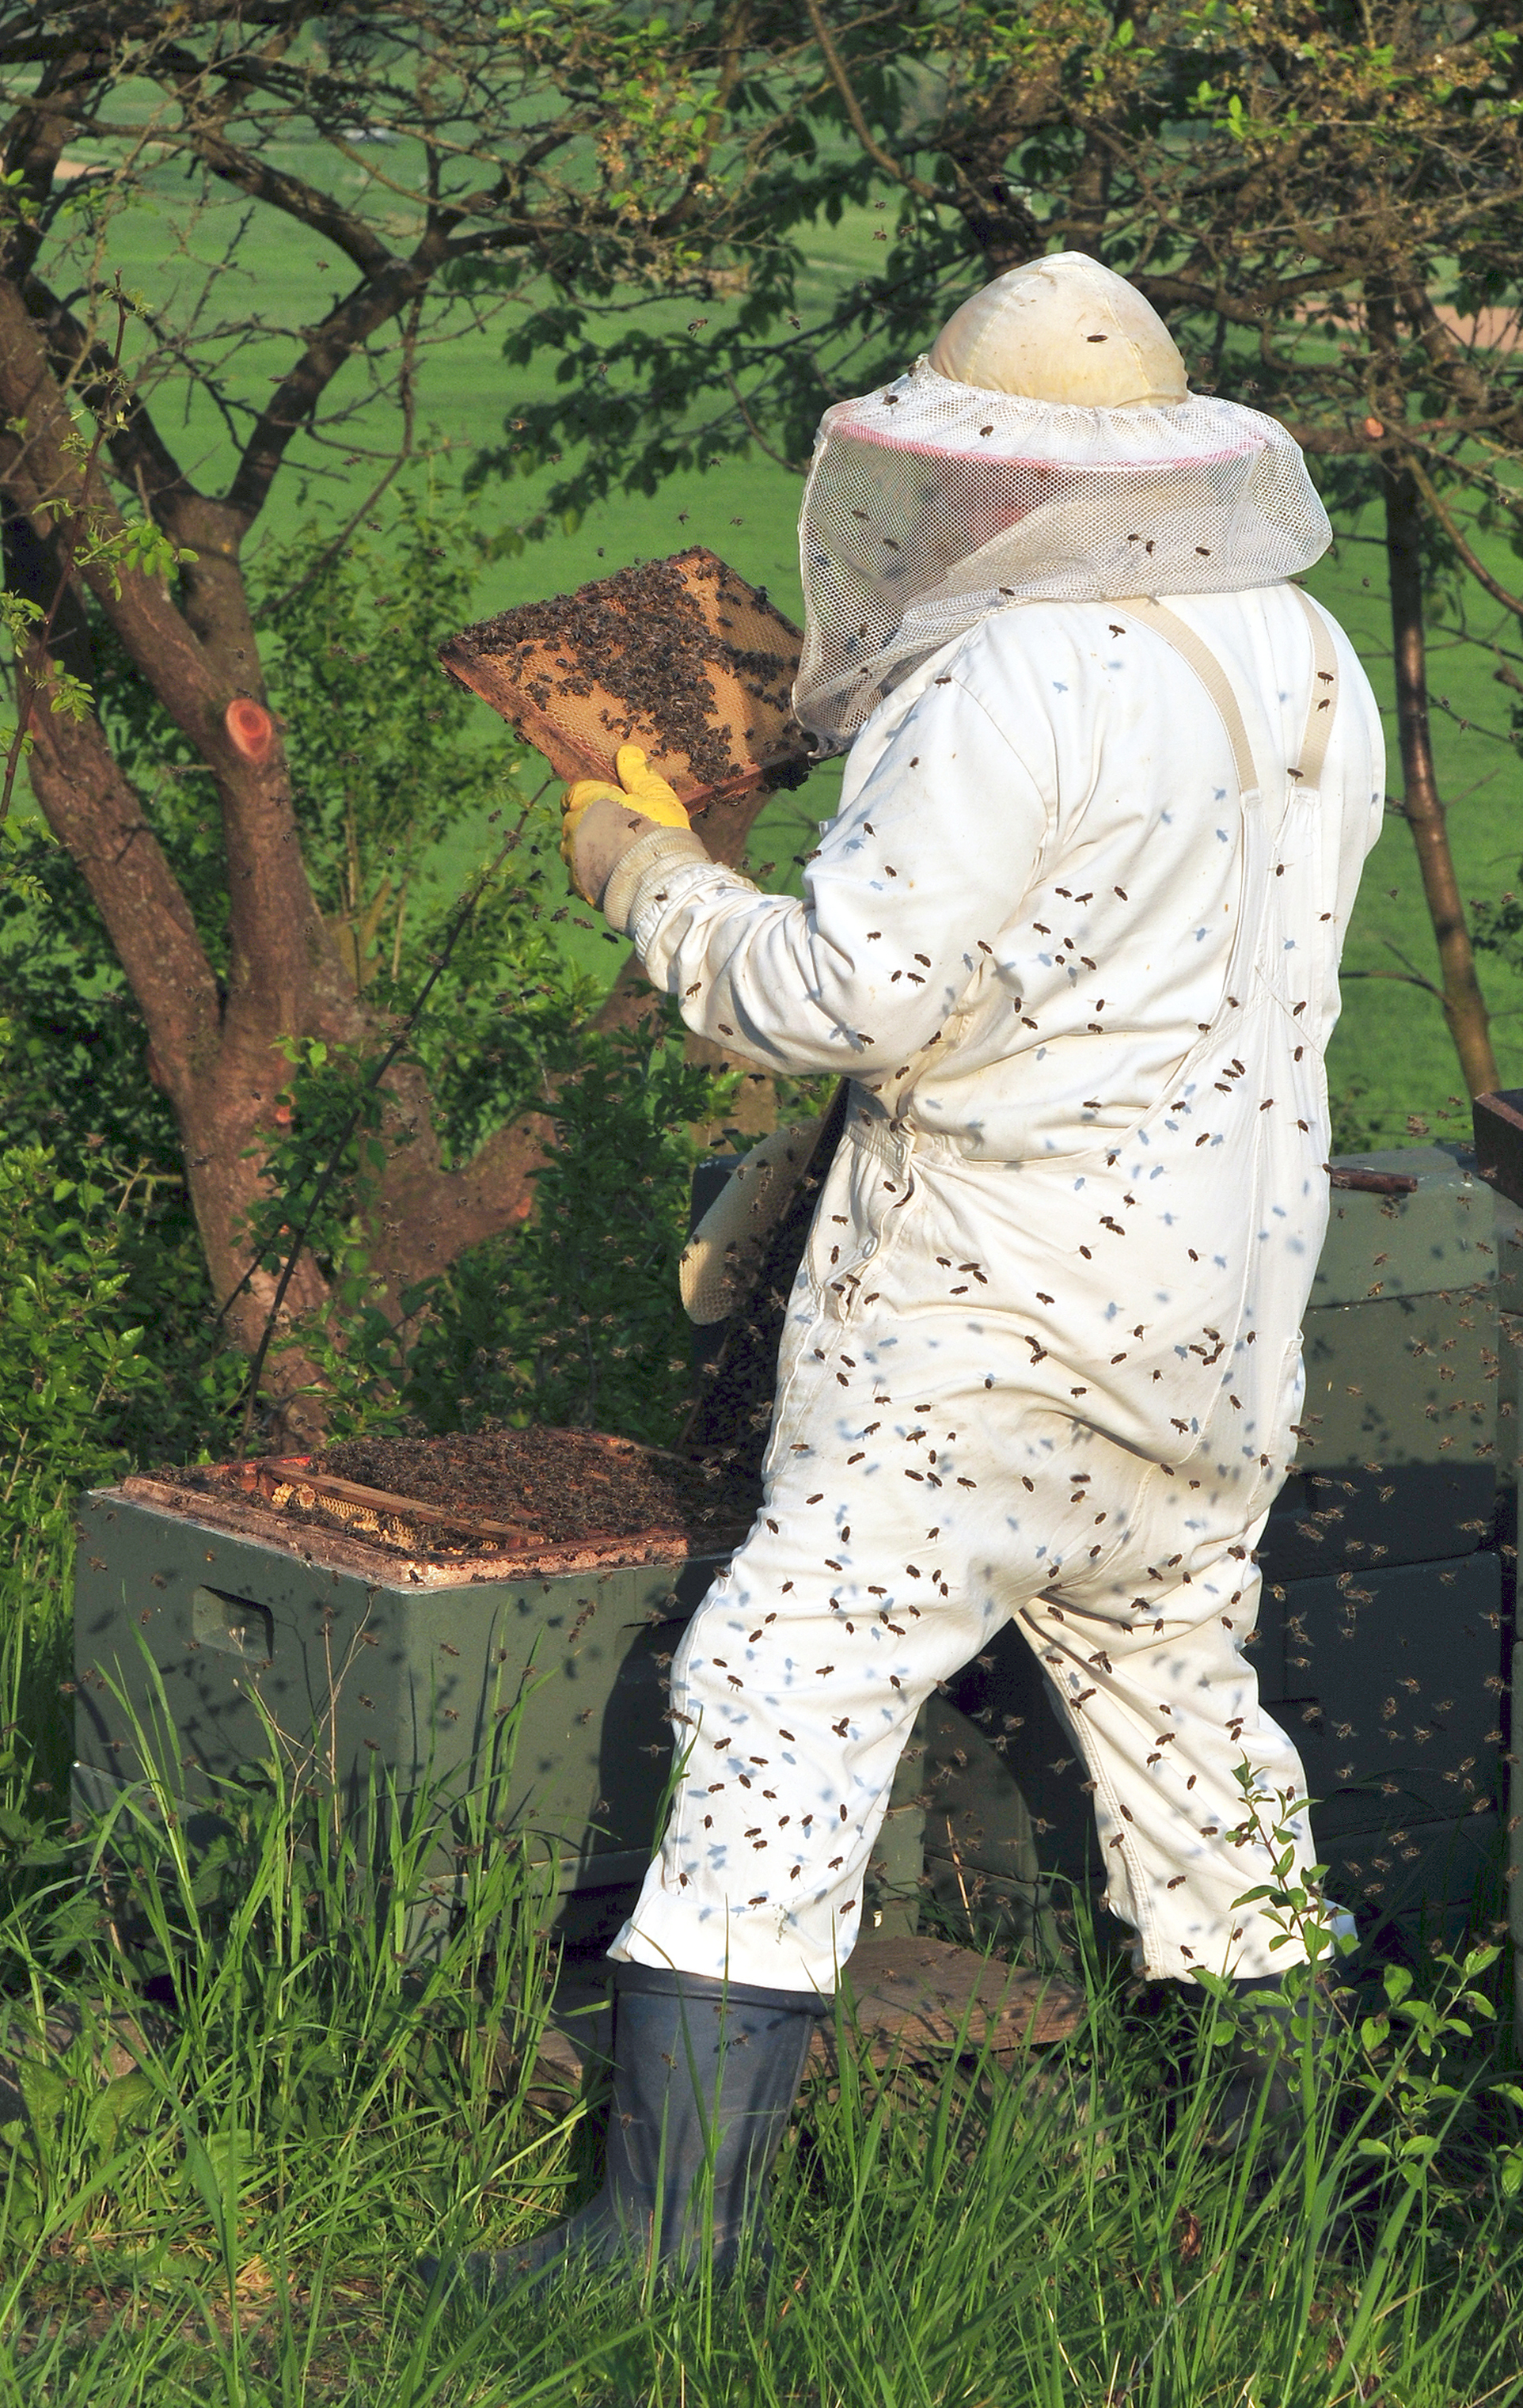 Beekeeper removing bees